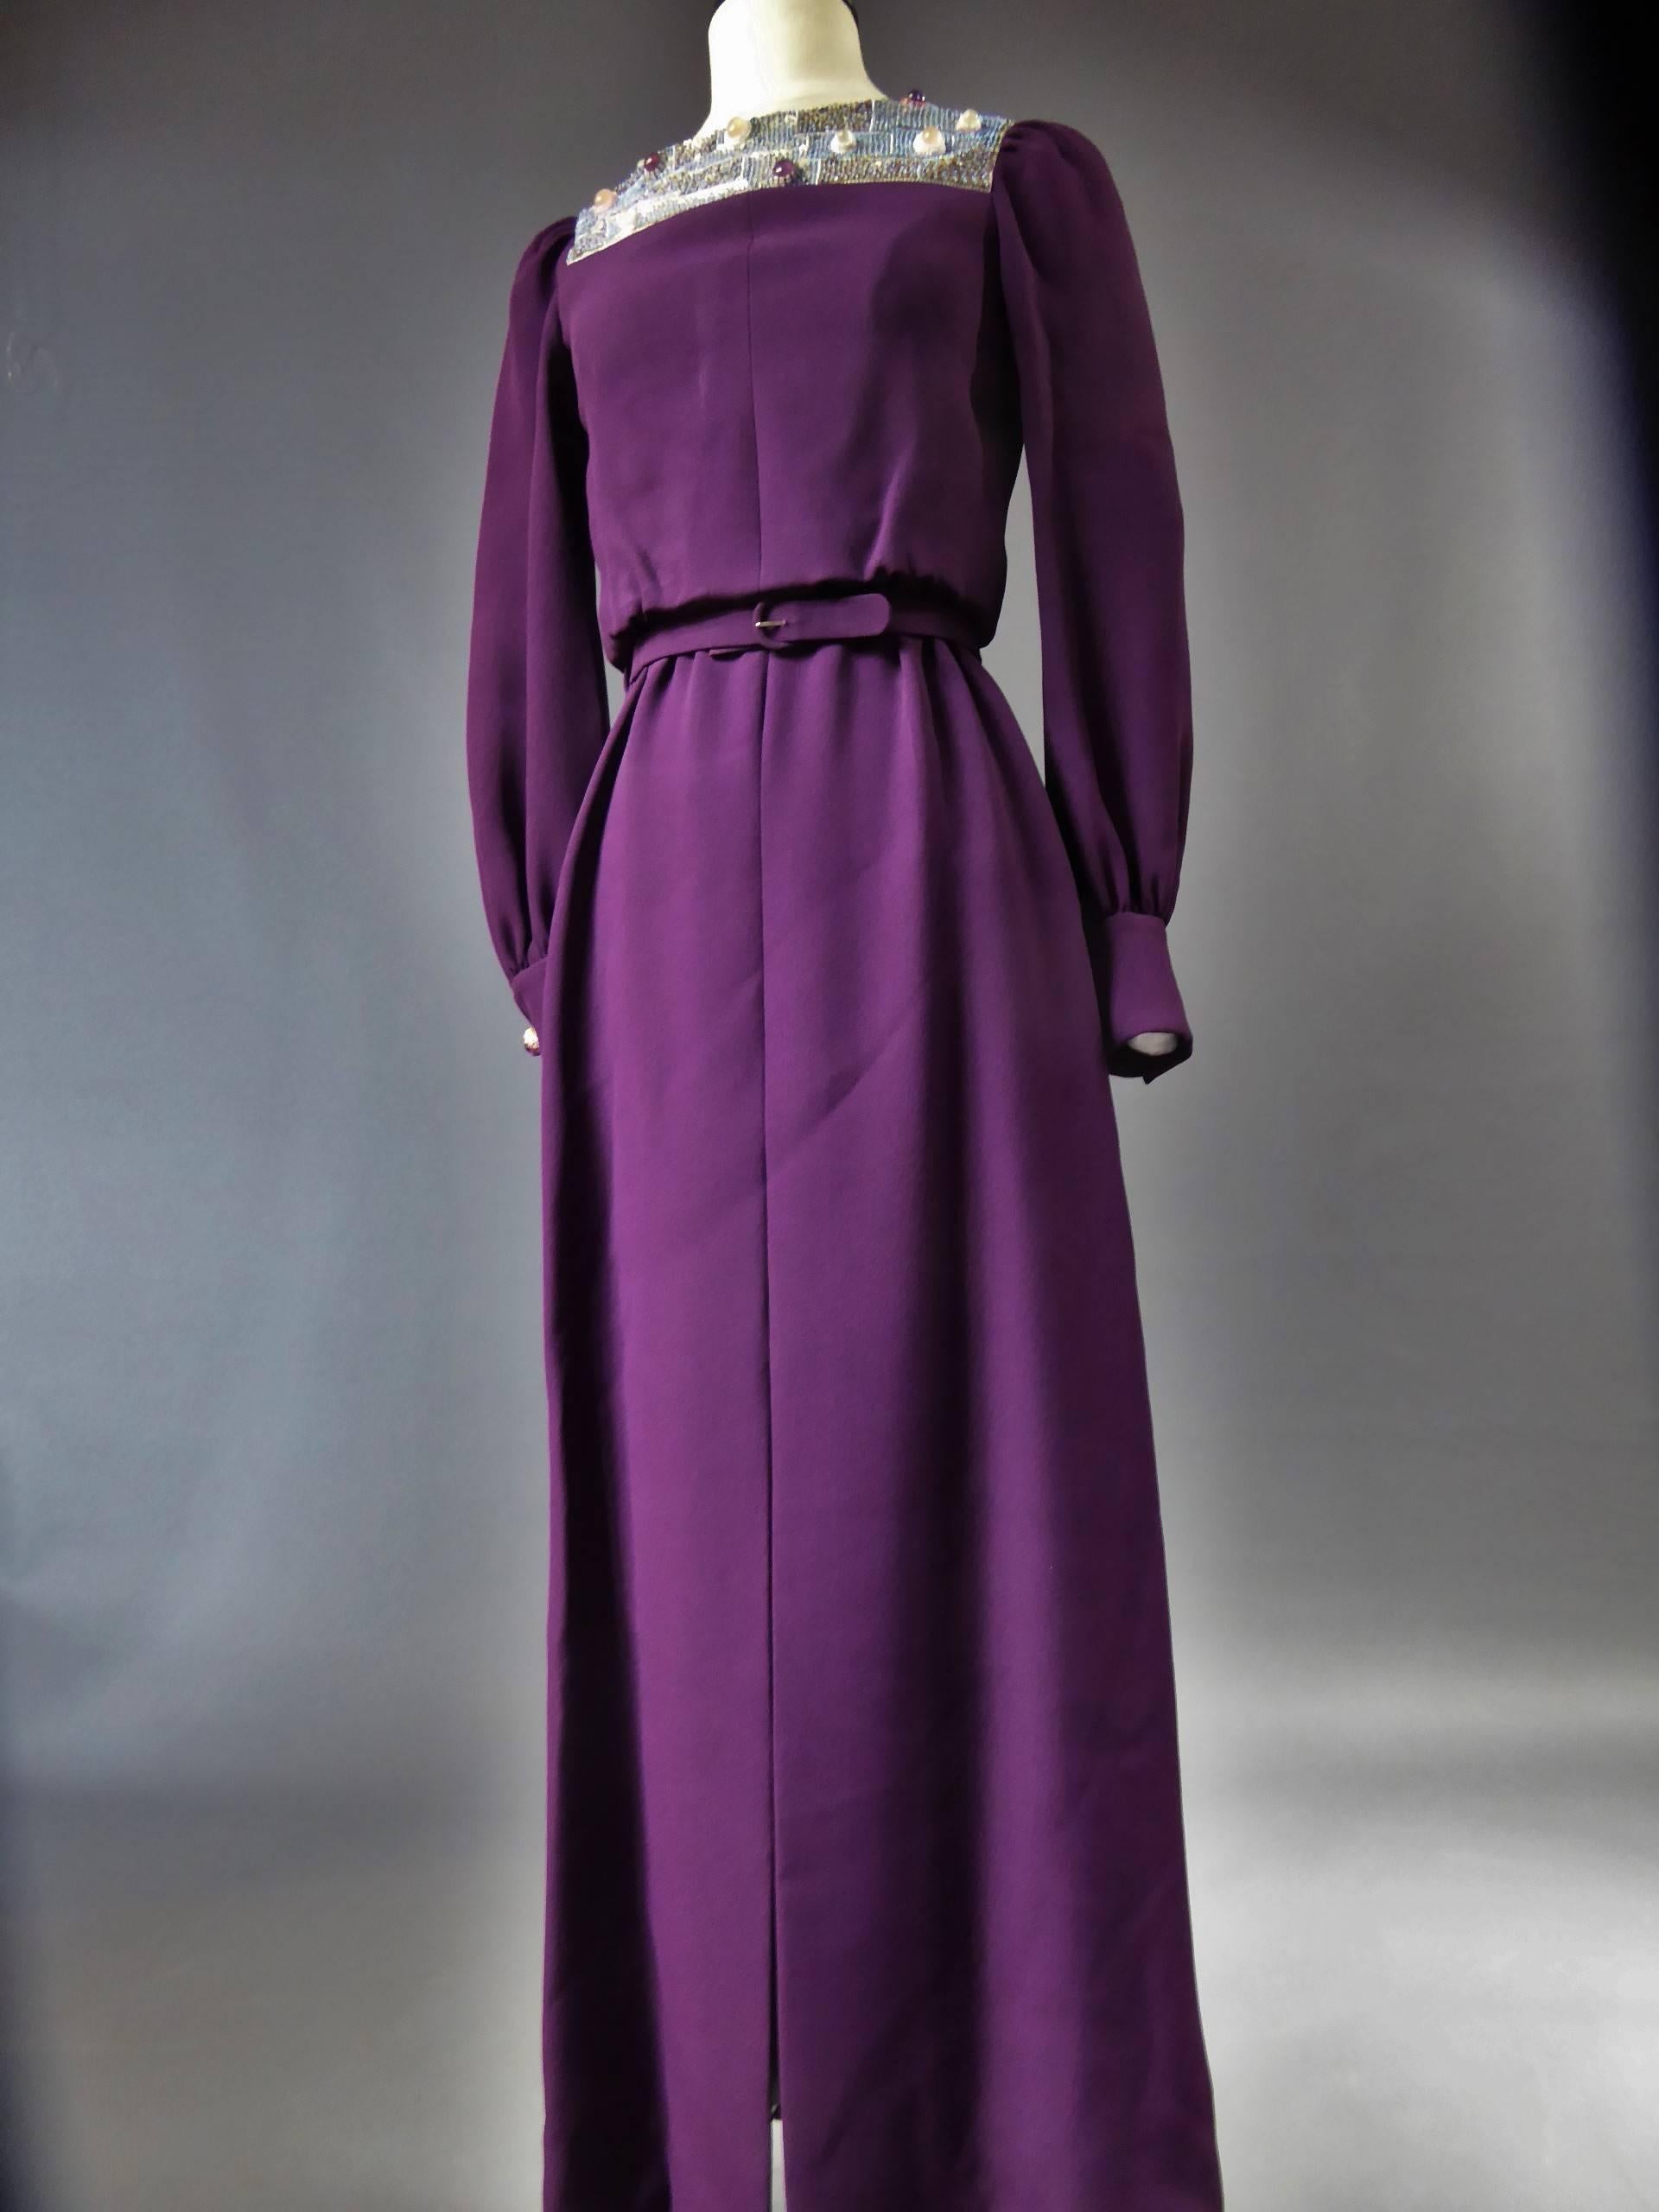 Women's Nina Ricci Couture Dress Collection Jeune Femme, 1970s For Sale